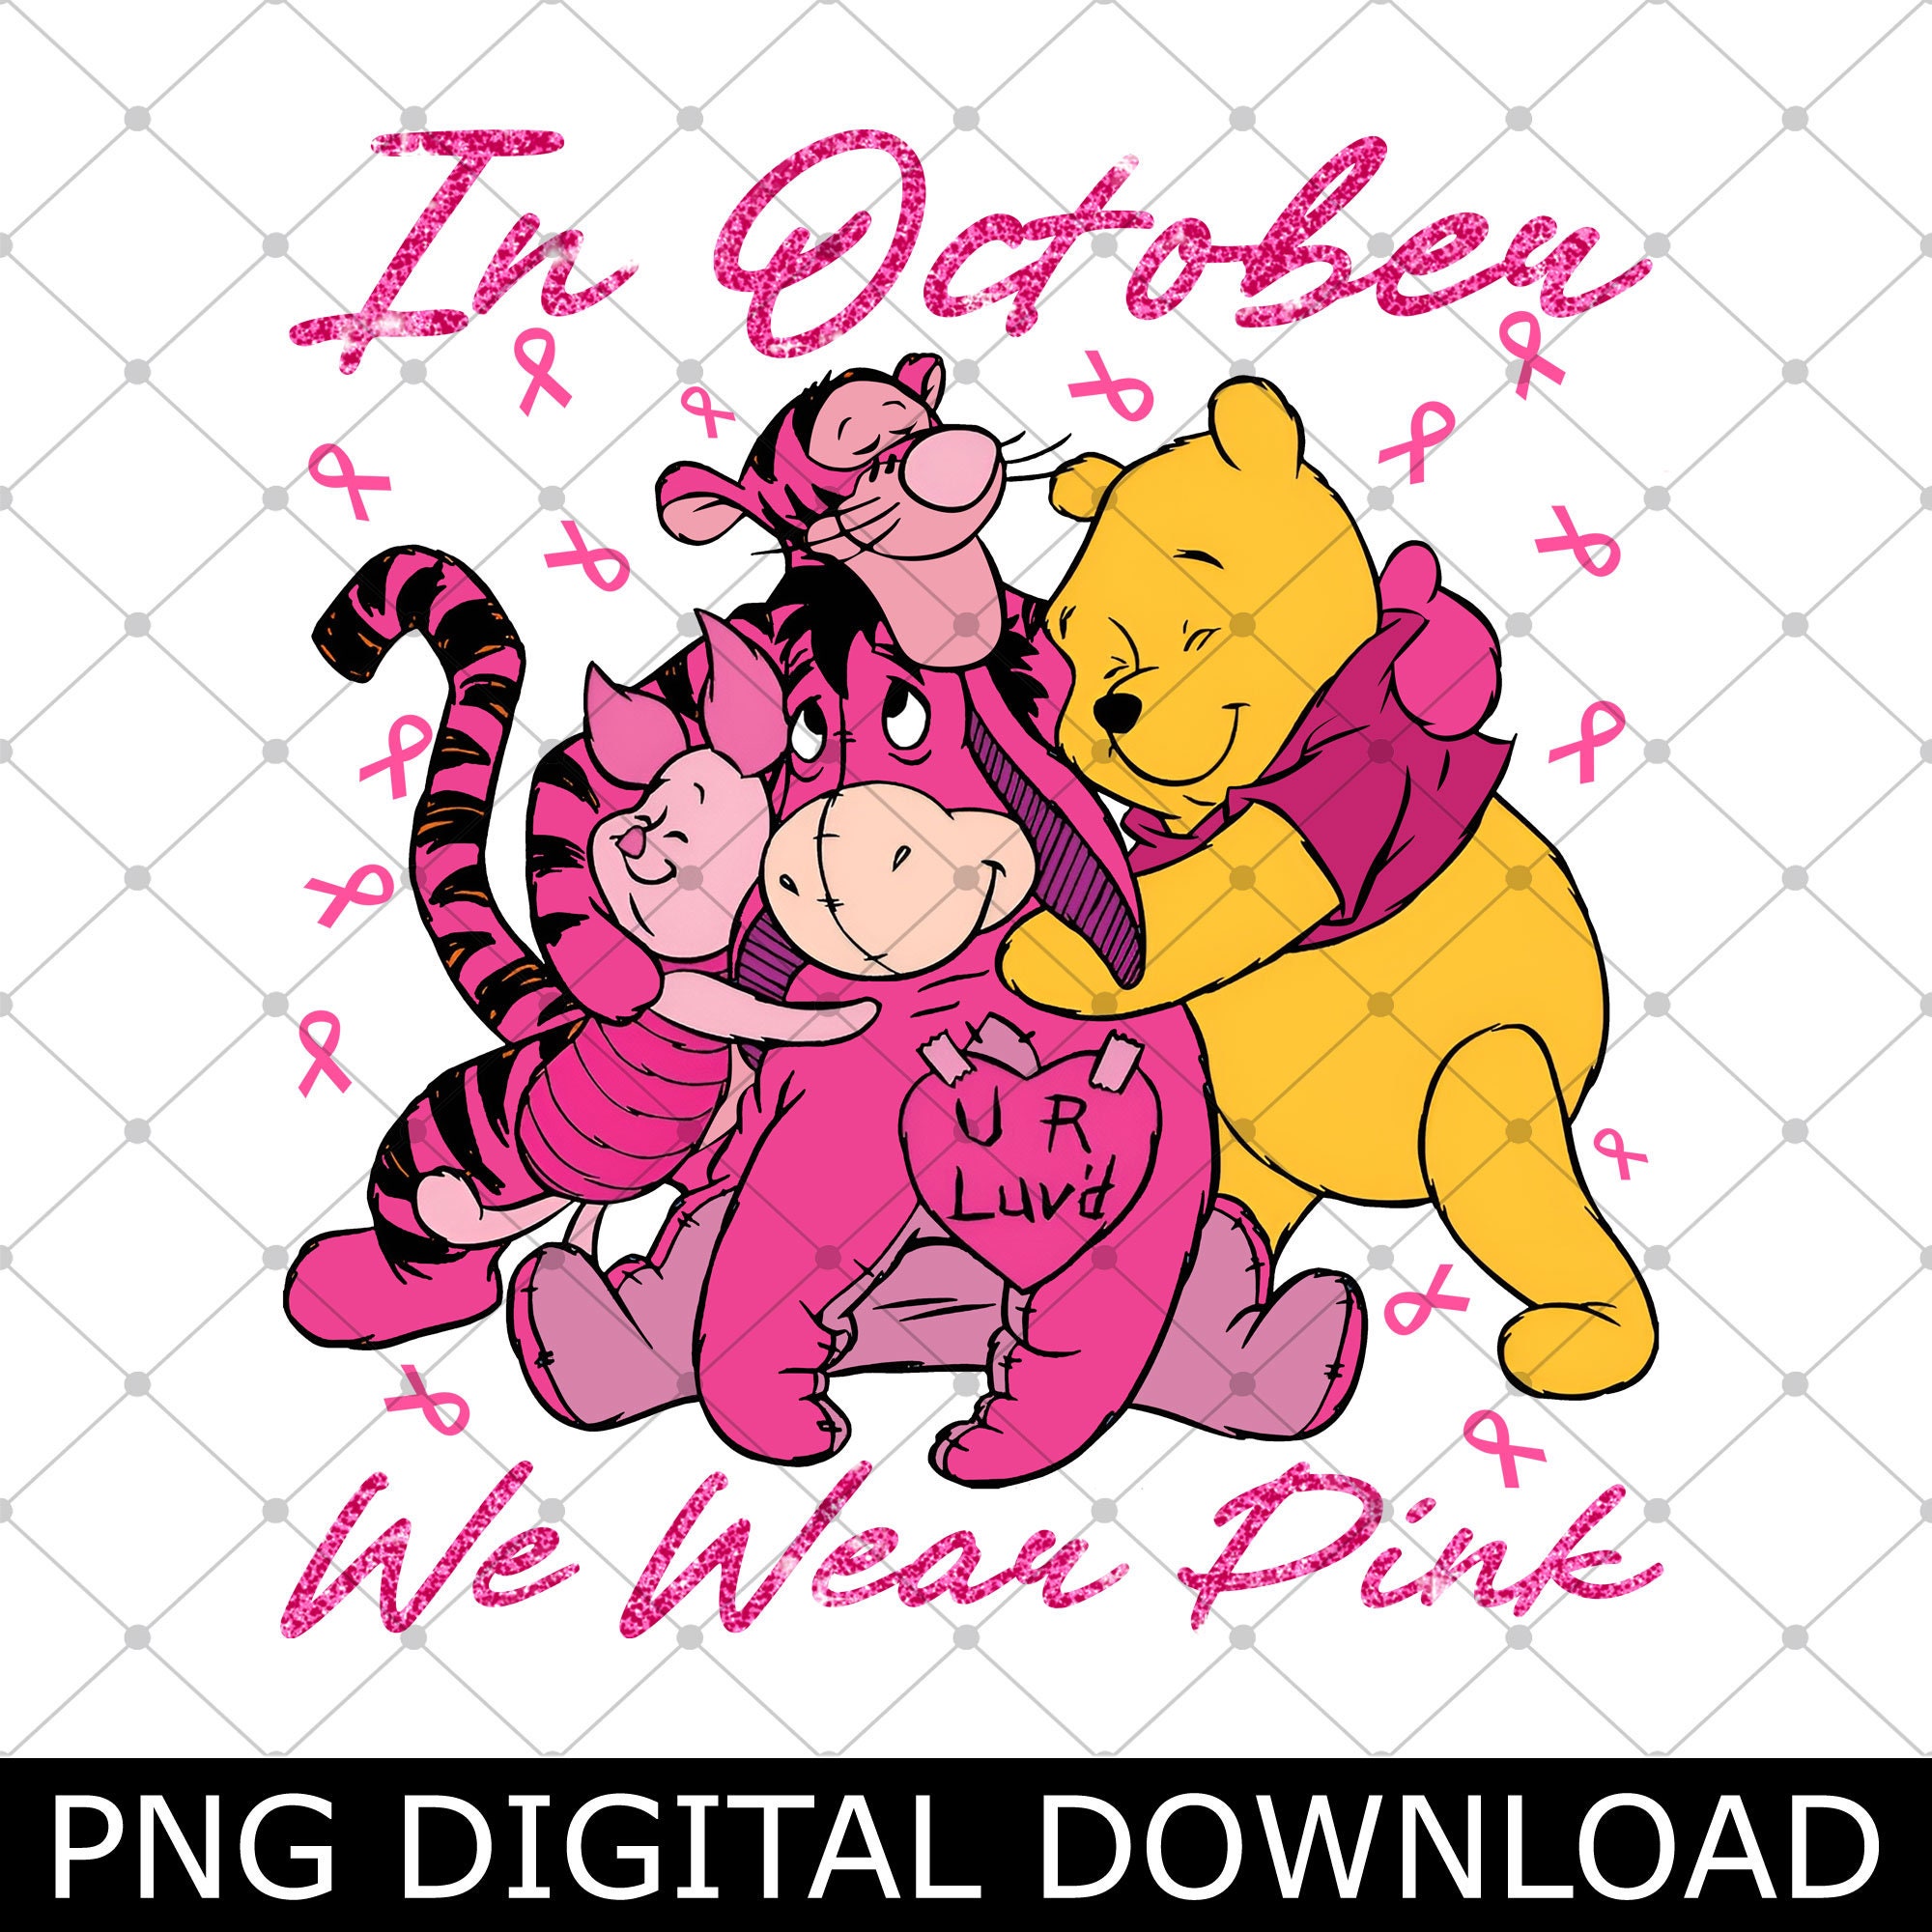 Disney Breast Cancer Awareness, Winnie the Pooh Pink Ribbon Tee sold by  BoNardelli, SKU 24631476